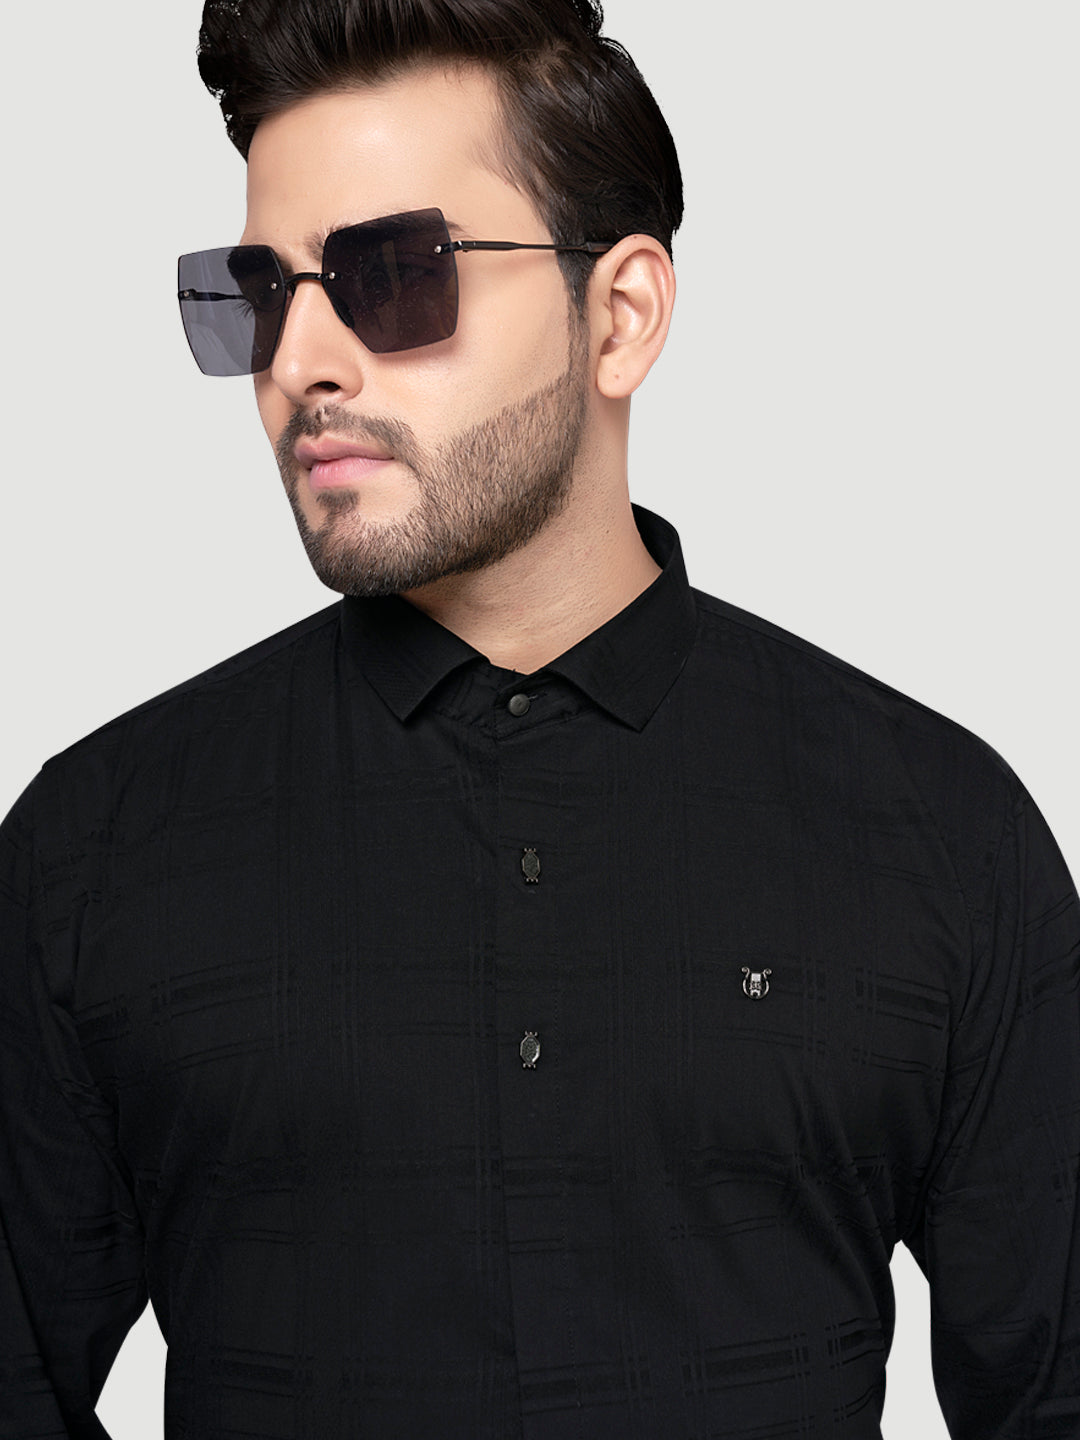 Designer Shirts with Collar Accessories- Black